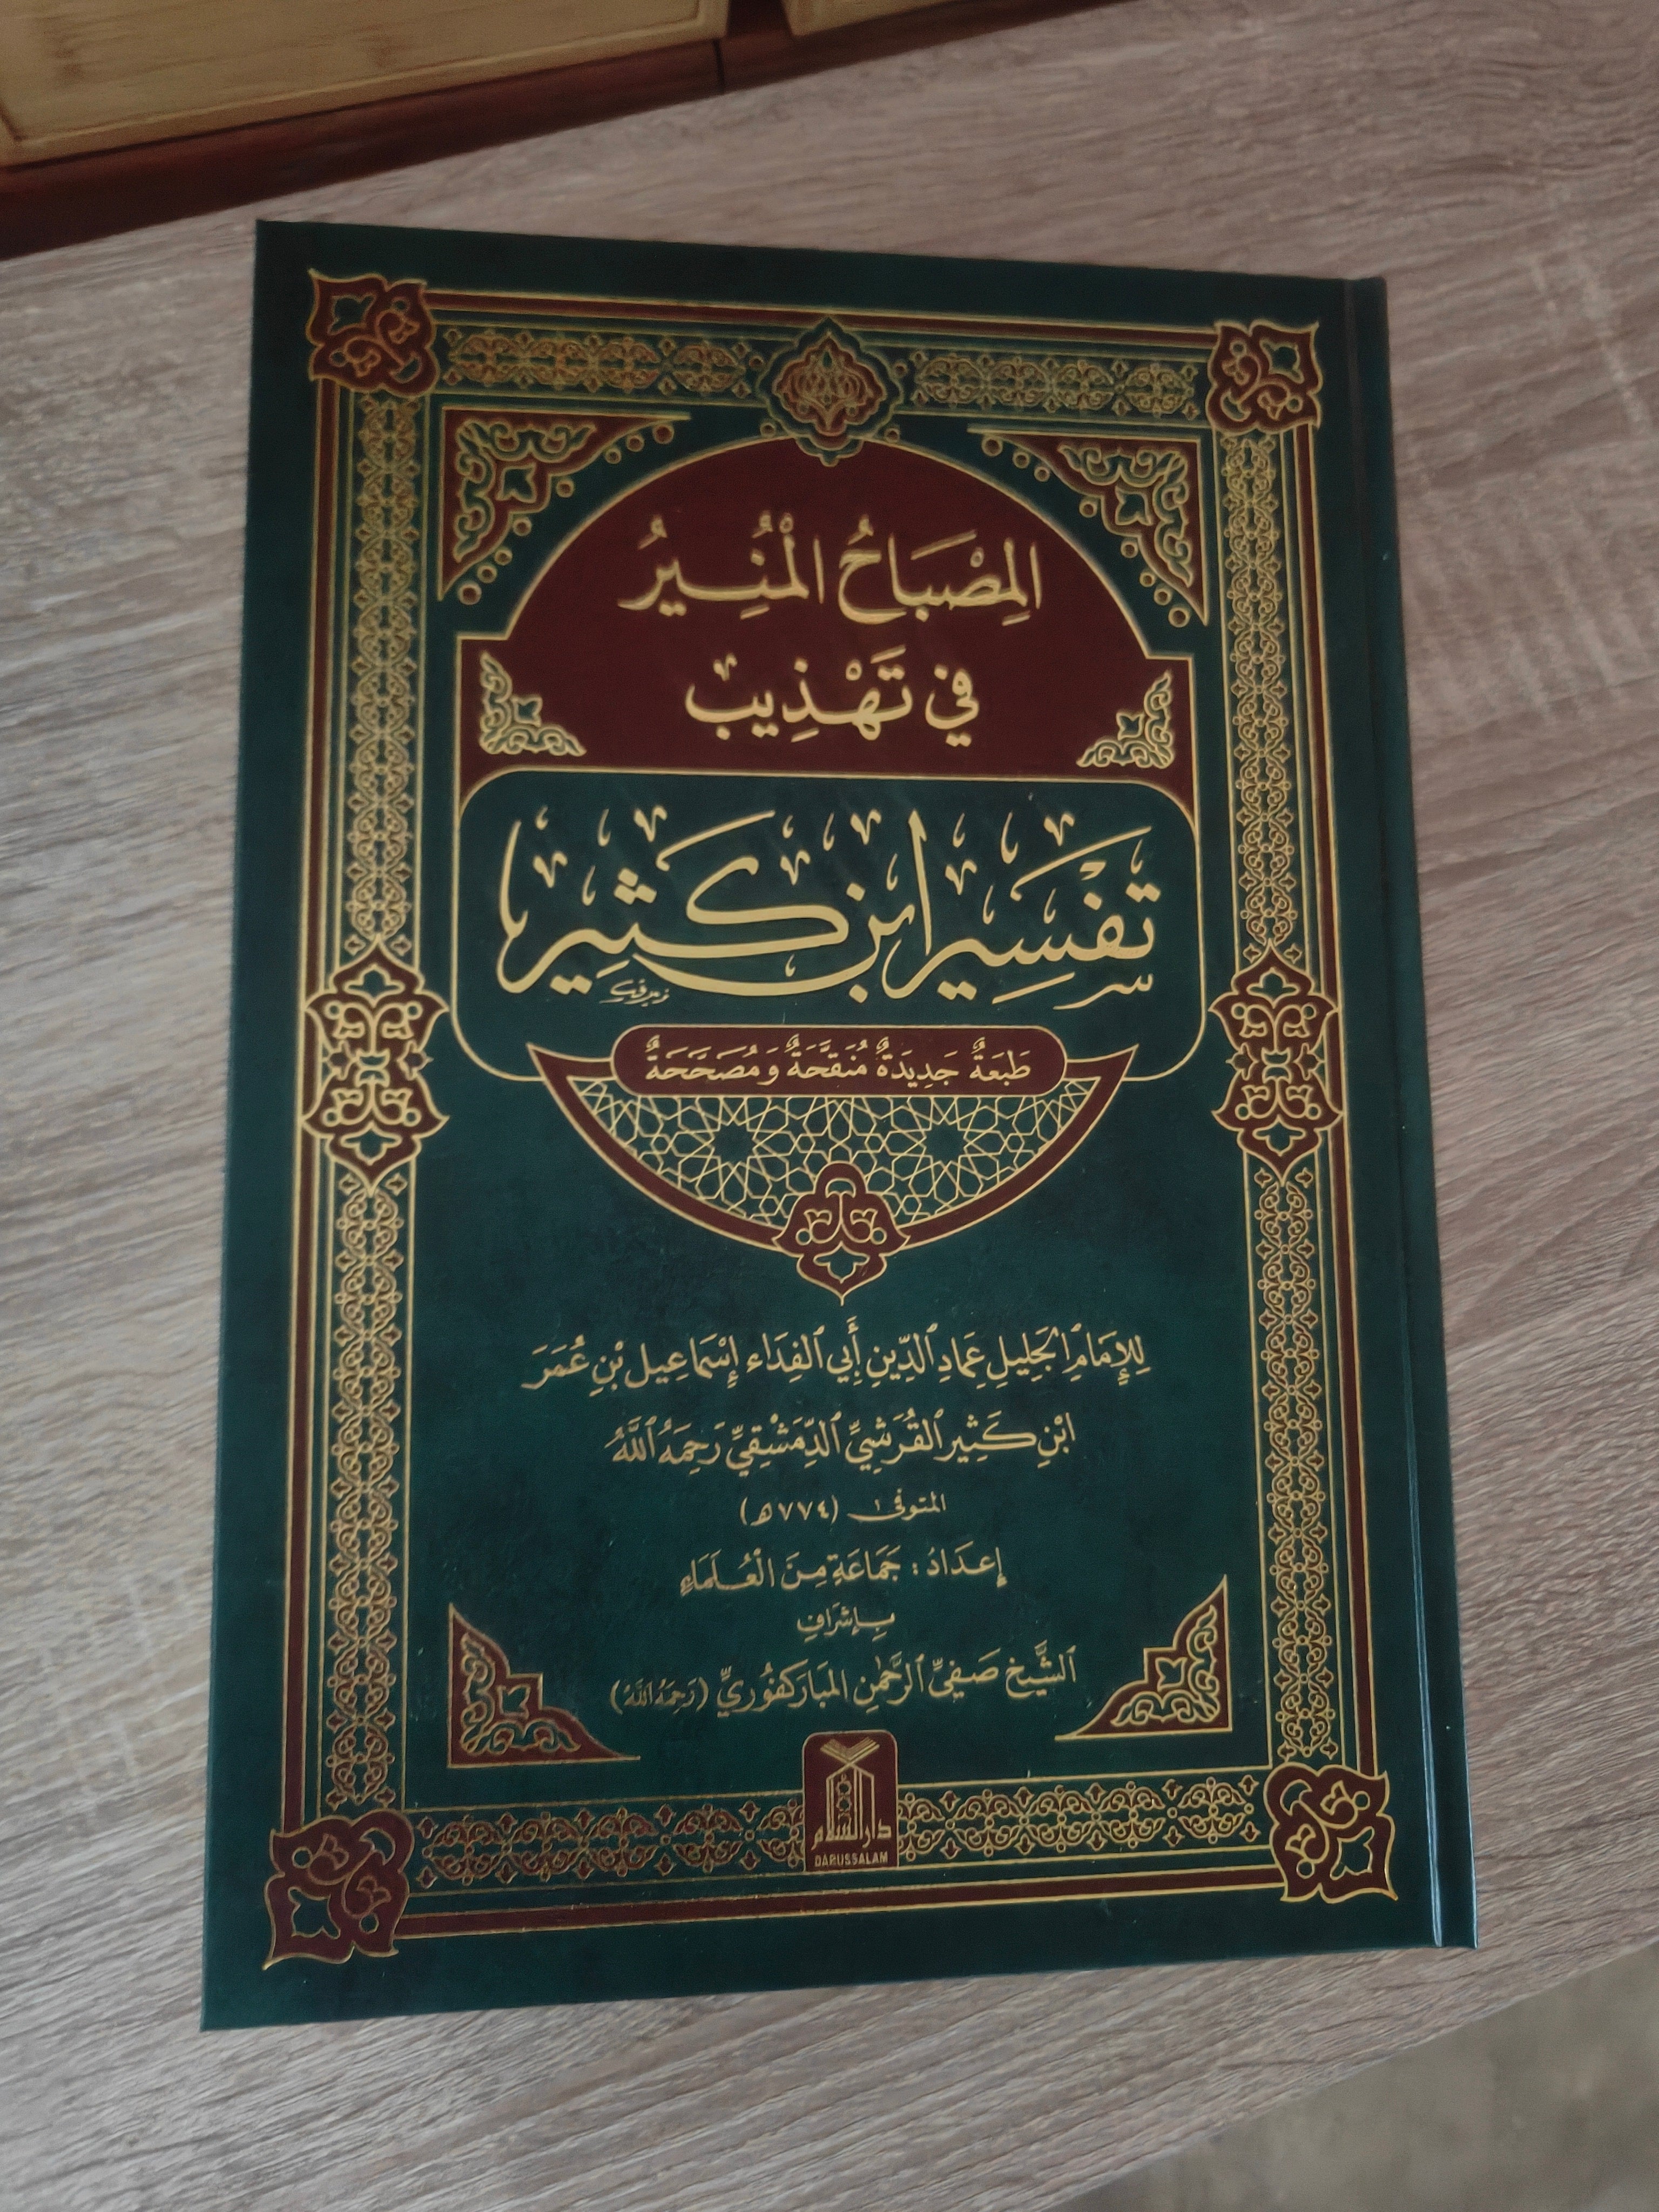 Summarised Tafsir Ibn Kathir in Arabic( أوجز التفاسير من تفسير ابن كثير )